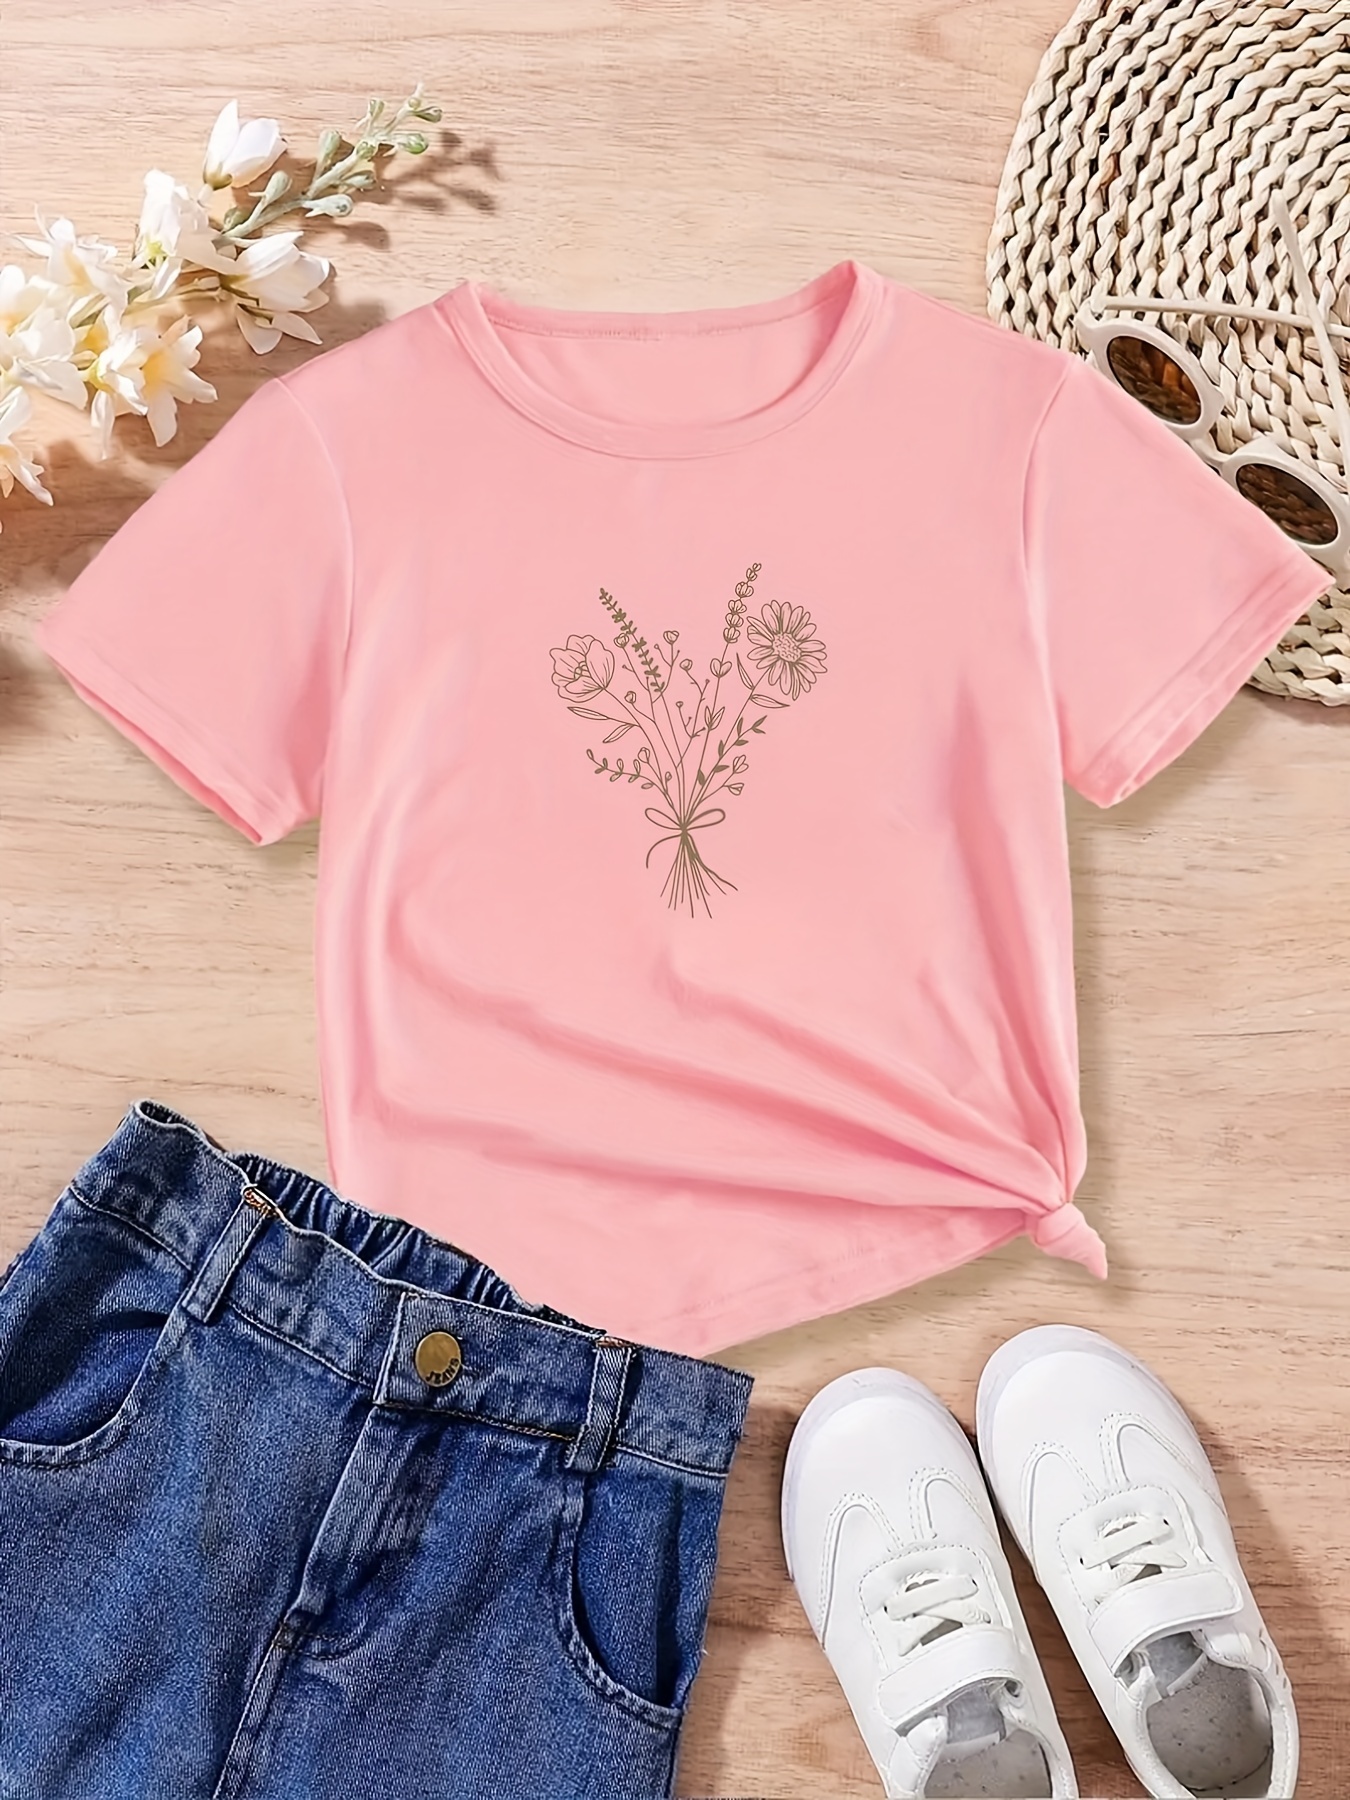 Girls Simple Flower Illustration Print T-shirt Comfort Fit Short